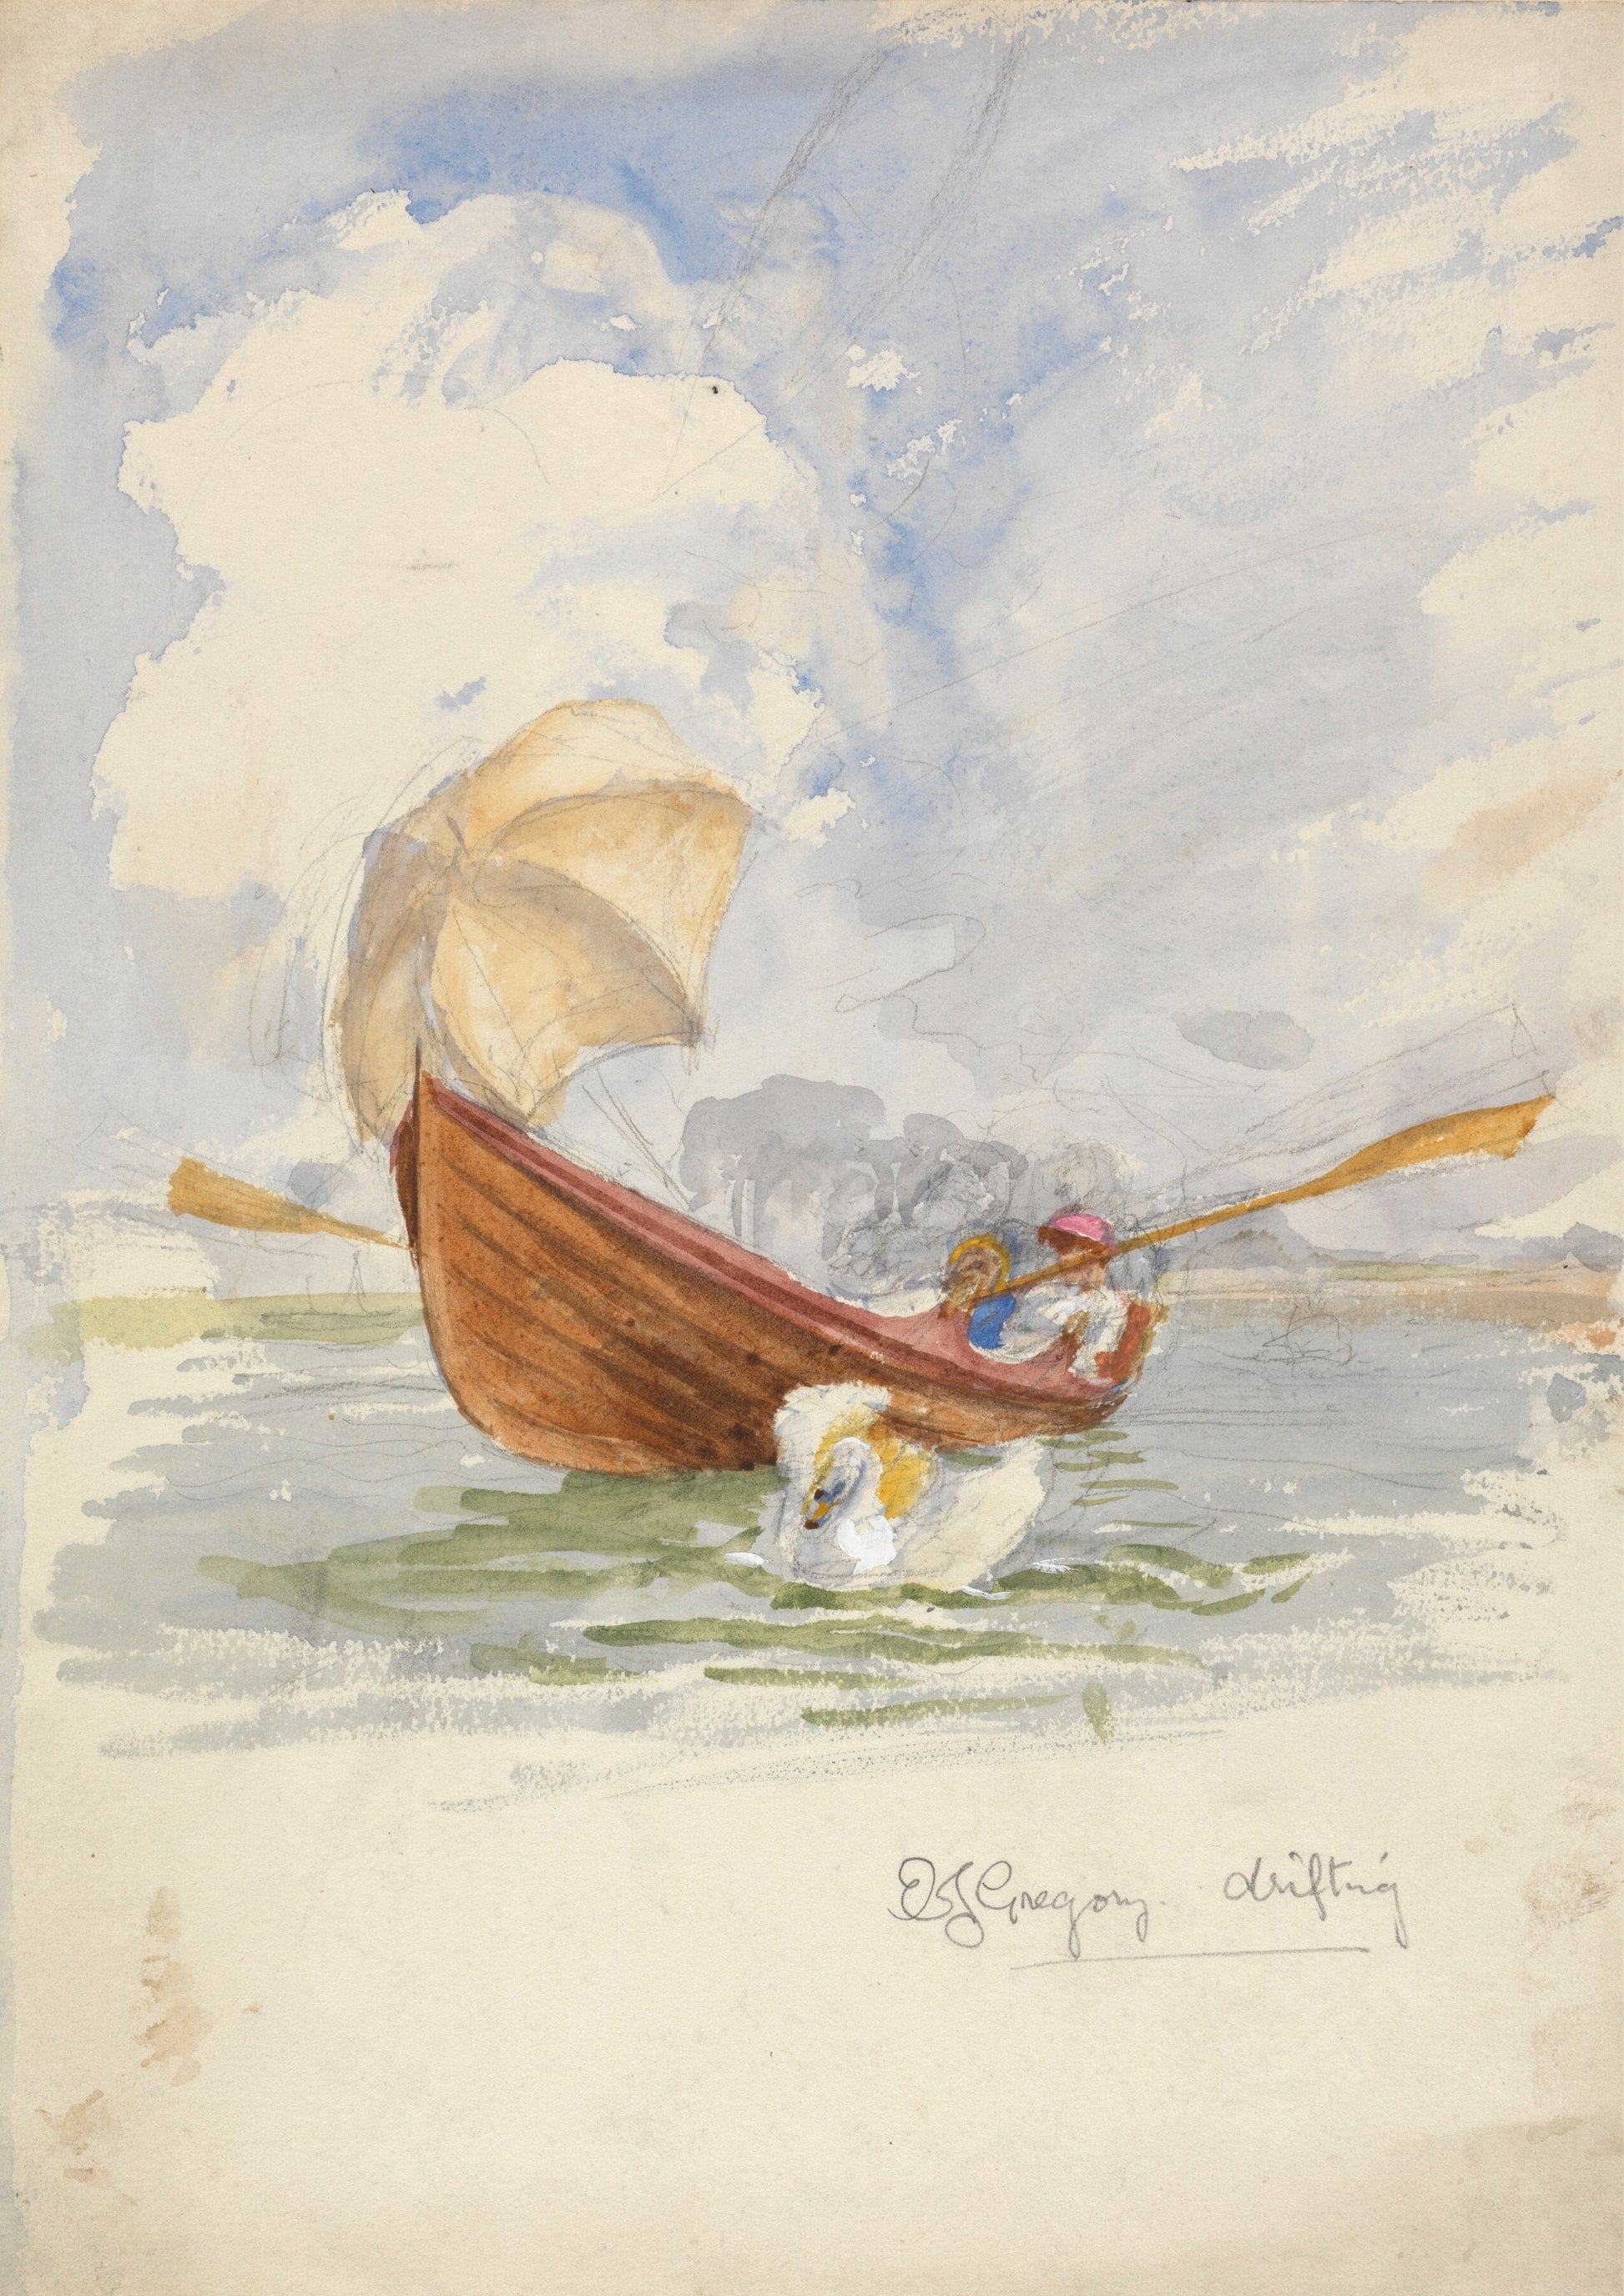 Boat Drifting (1800s) | Vintage bathroom prints | Edward John Gregory Posters, Prints, & Visual Artwork The Trumpet Shop   